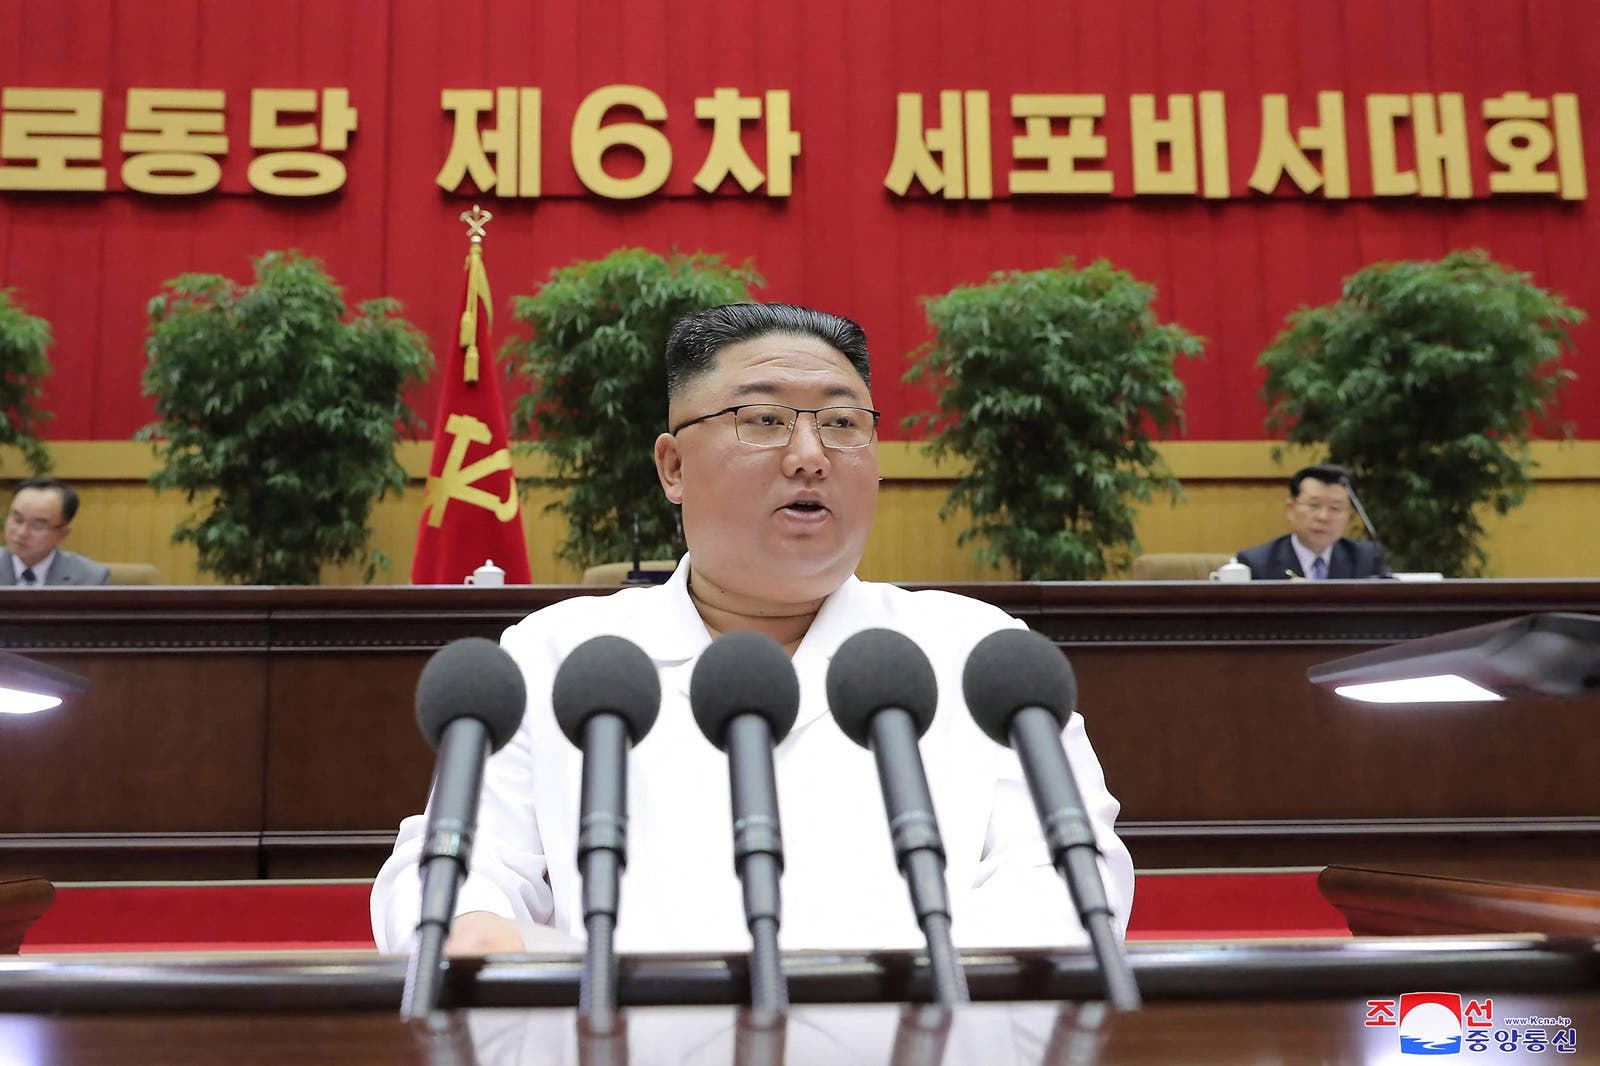 North Korea could resume nuke tests